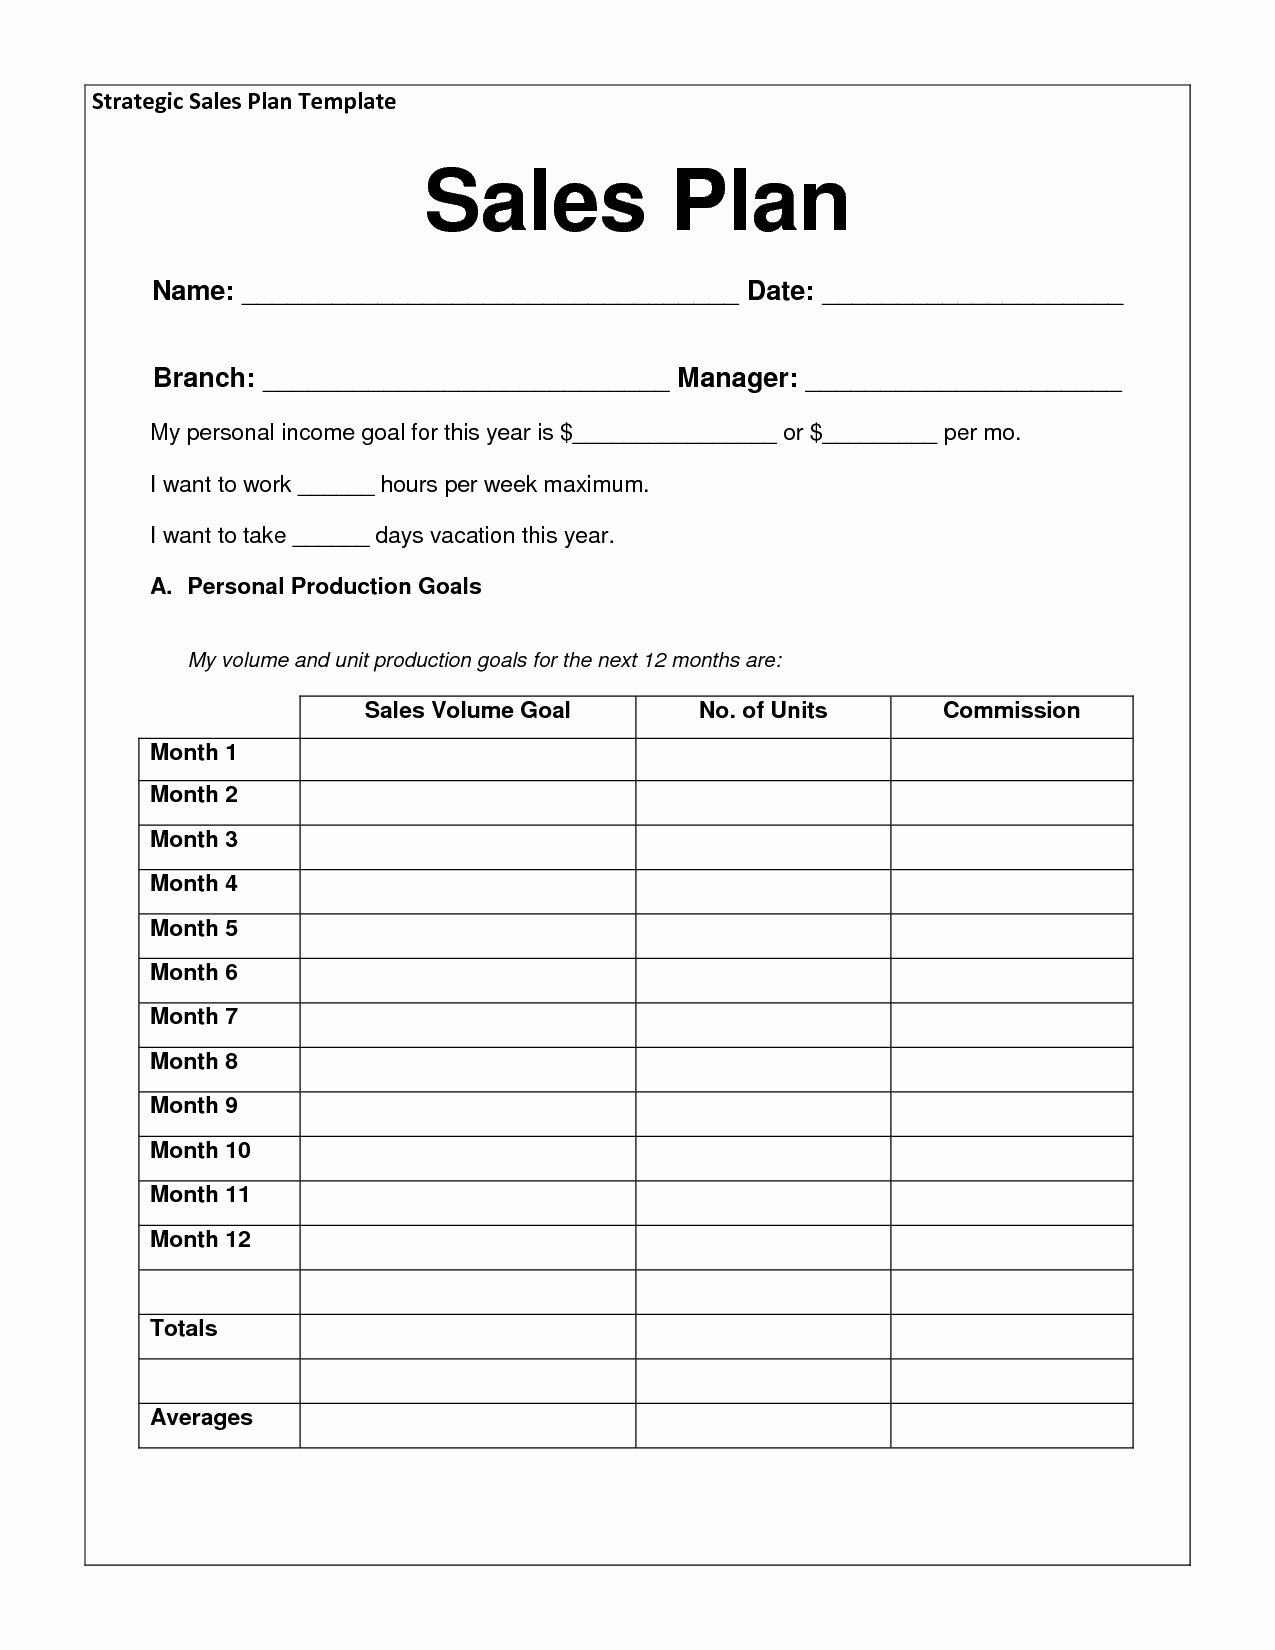 Sales Plan Template Excel Unique Sales Plan Templates Word Excel Samples